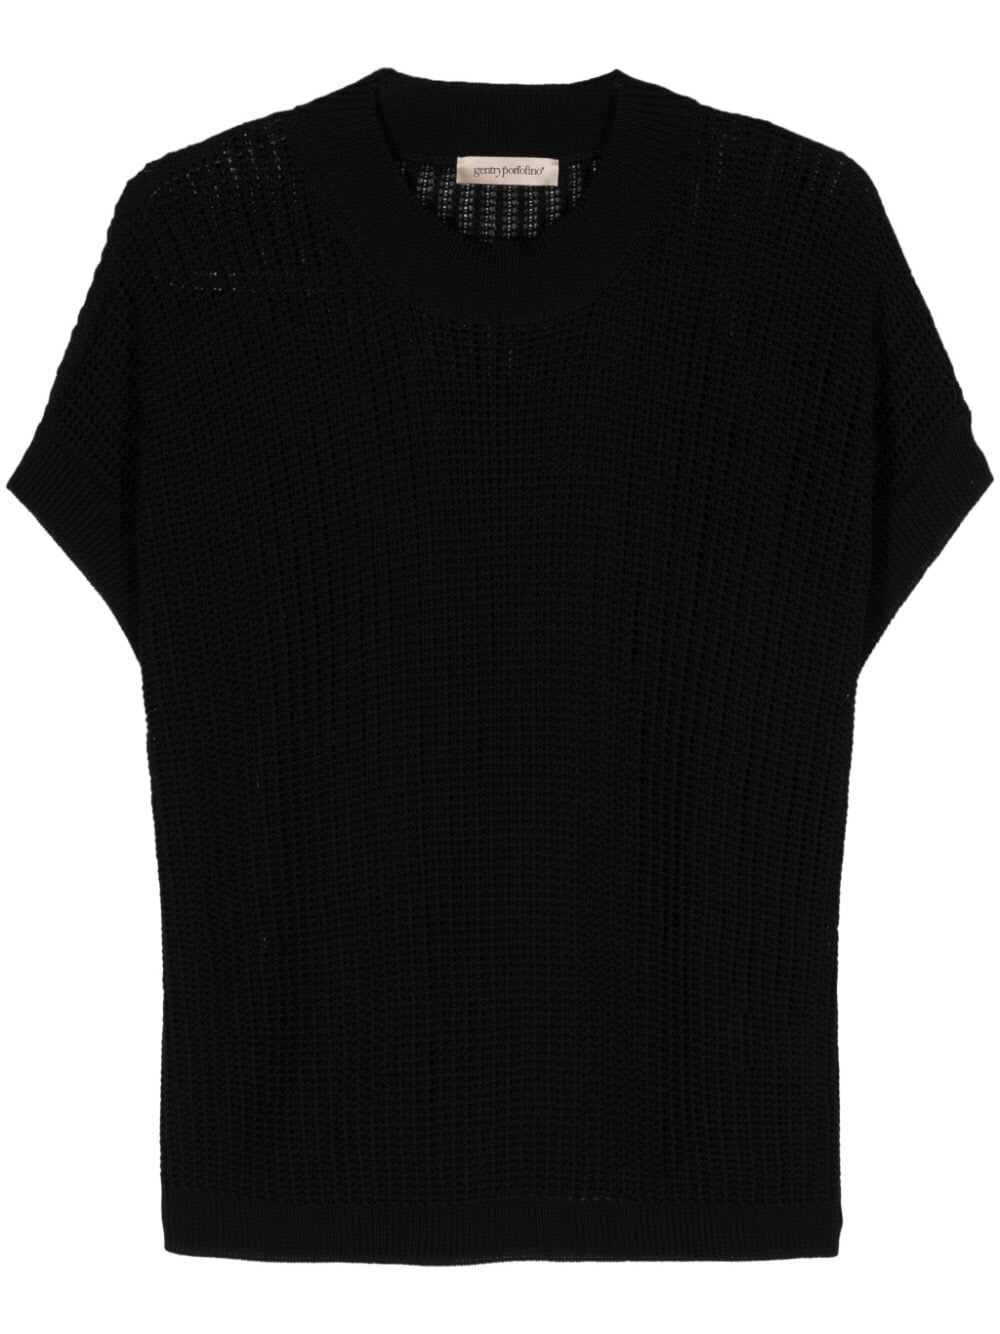 Gentry Portofino Short Sleeves Crew Neck Sweater In Black